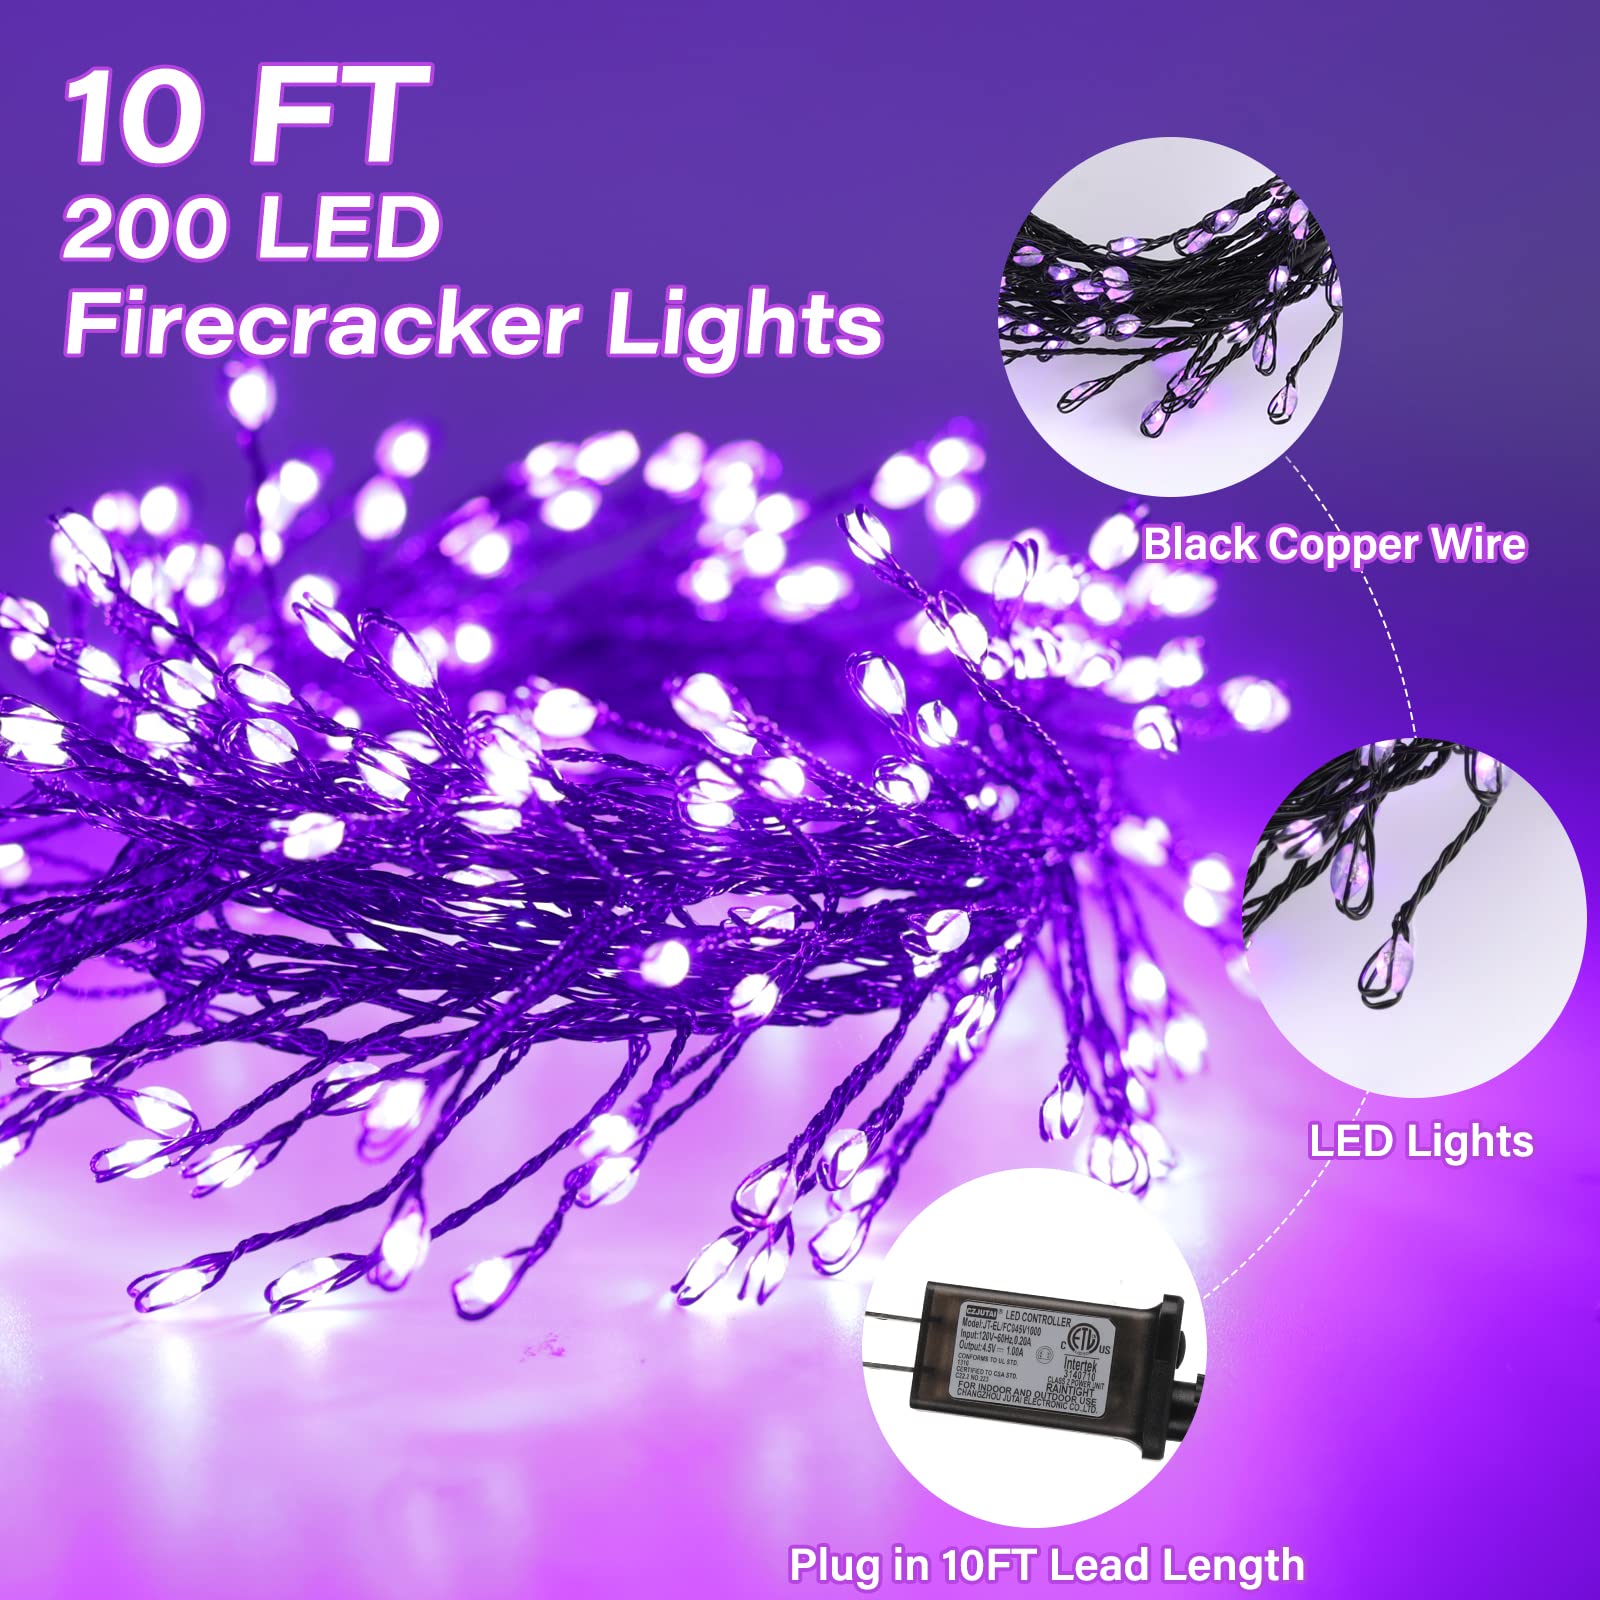 1 x 10 Feet / 200 LED / Purple / Black Wire